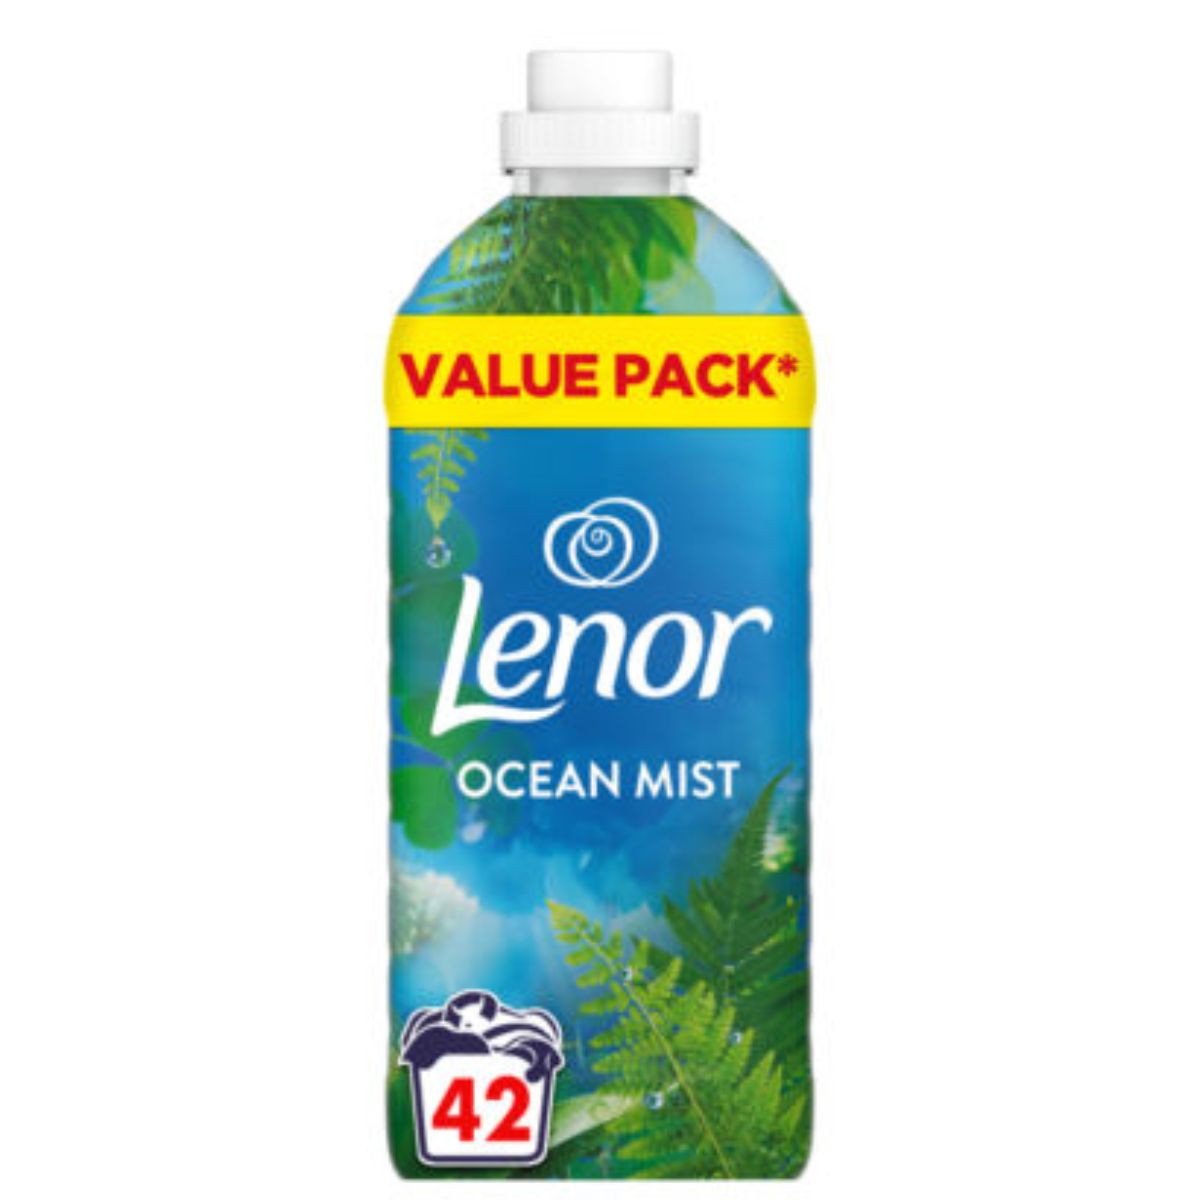 Lenor - Fabric Conditioner Ocean Mist - 42 Washes value pack.